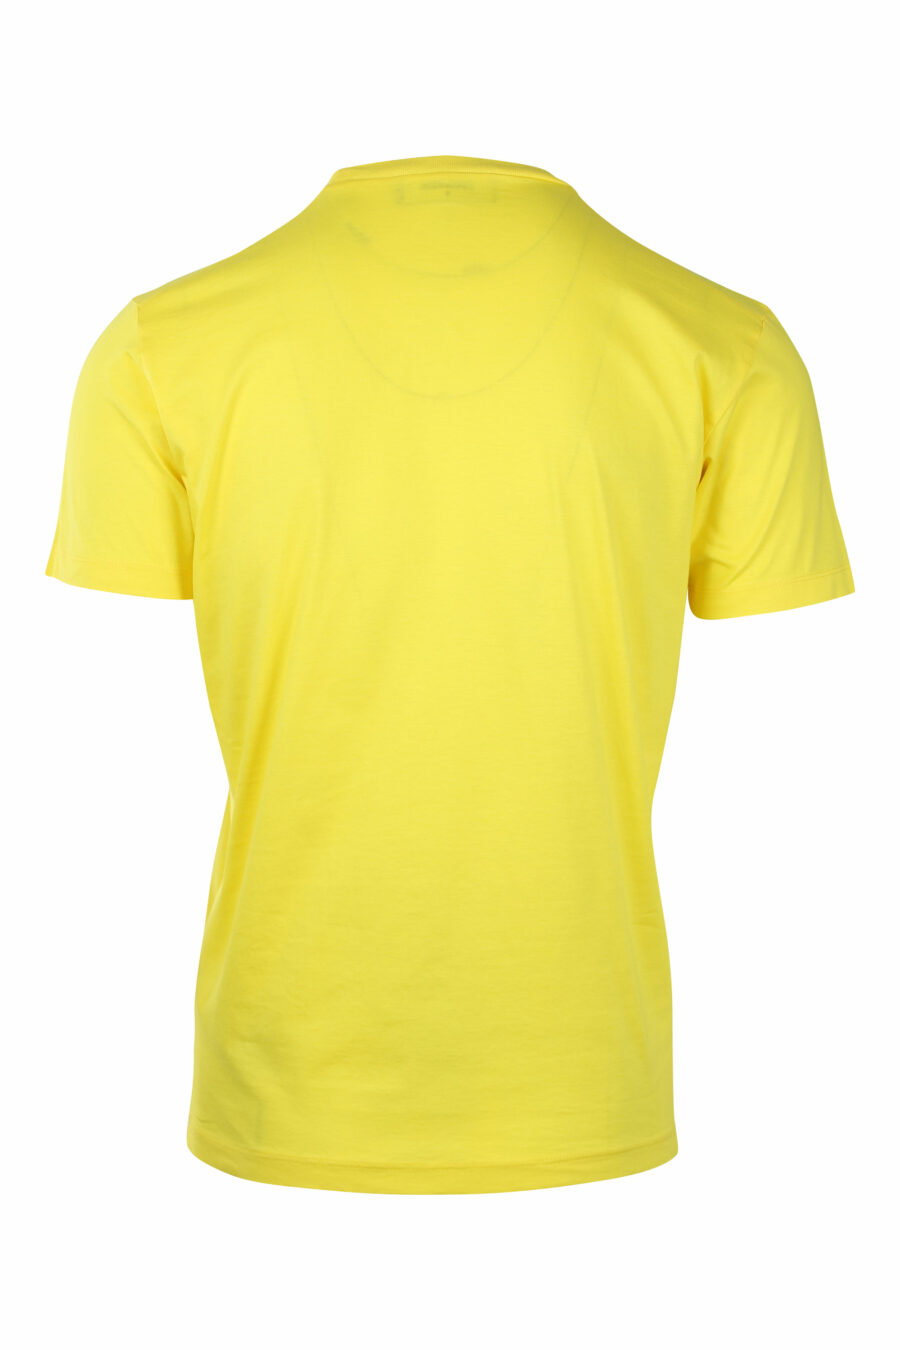 Camiseta amarilla con doble logo "icon" blanco - IMG 1406